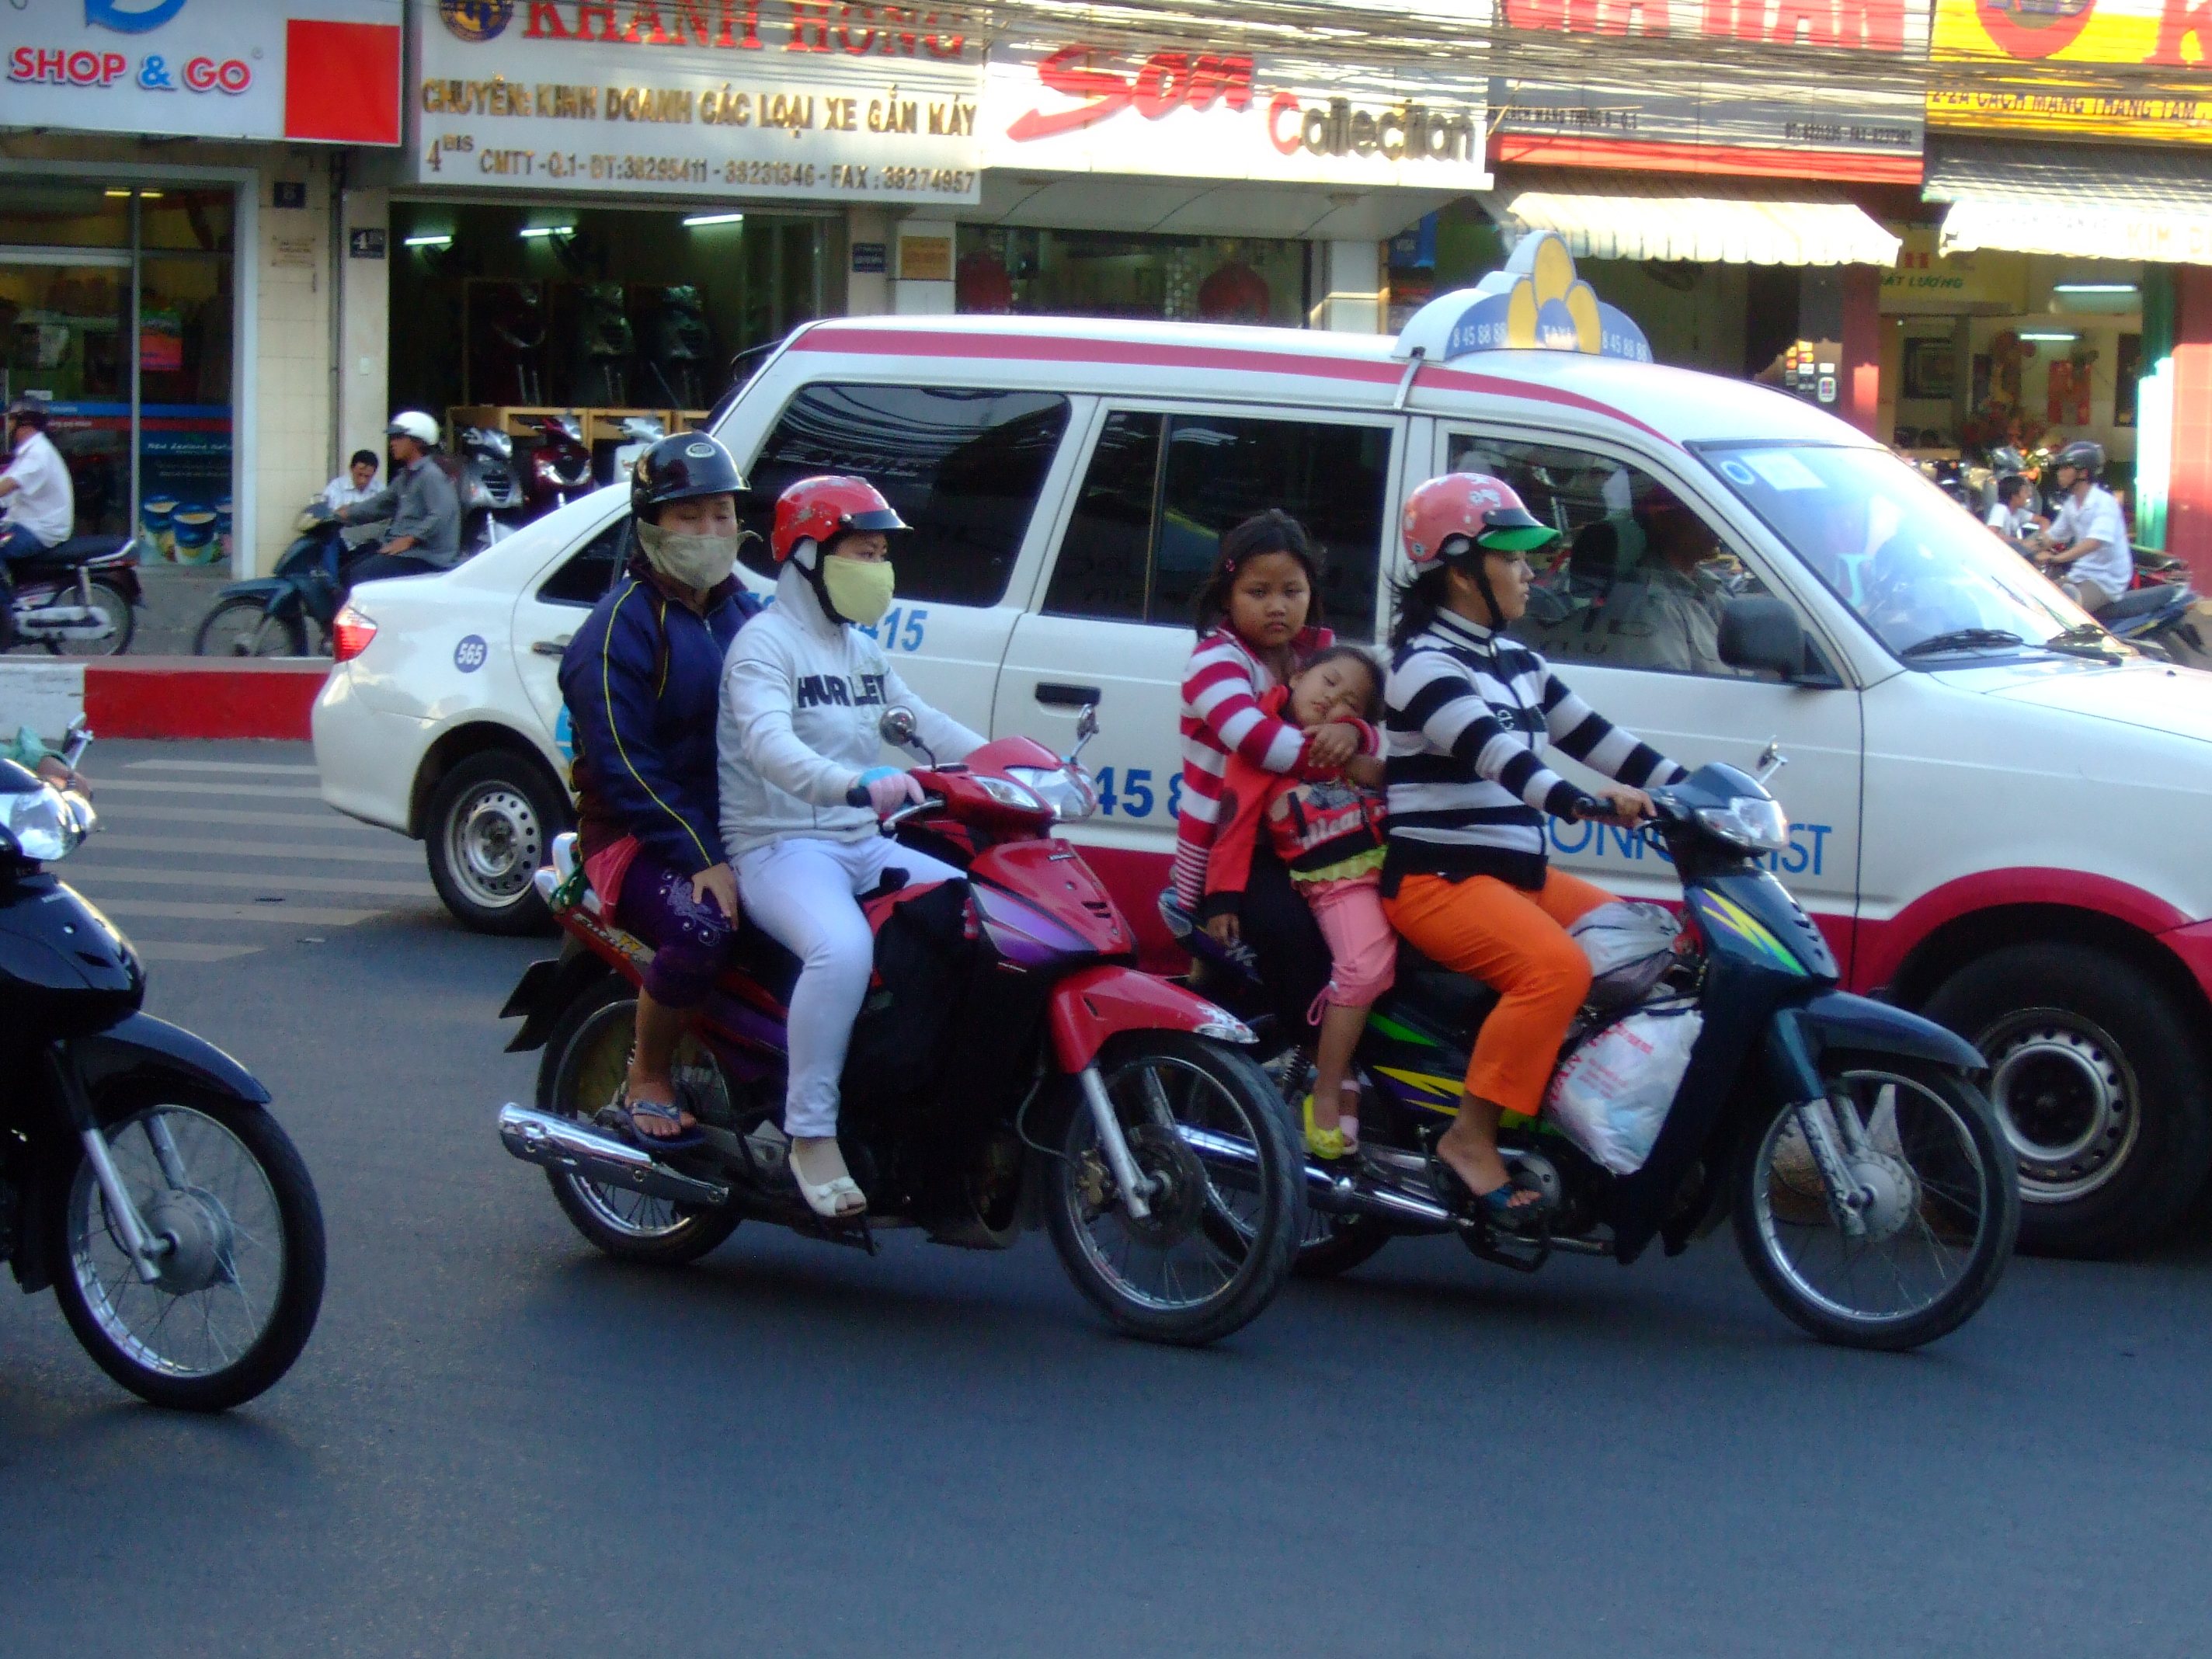 Vietnam Ho Chi Minh City motorbike street scenes Feb 2009 109